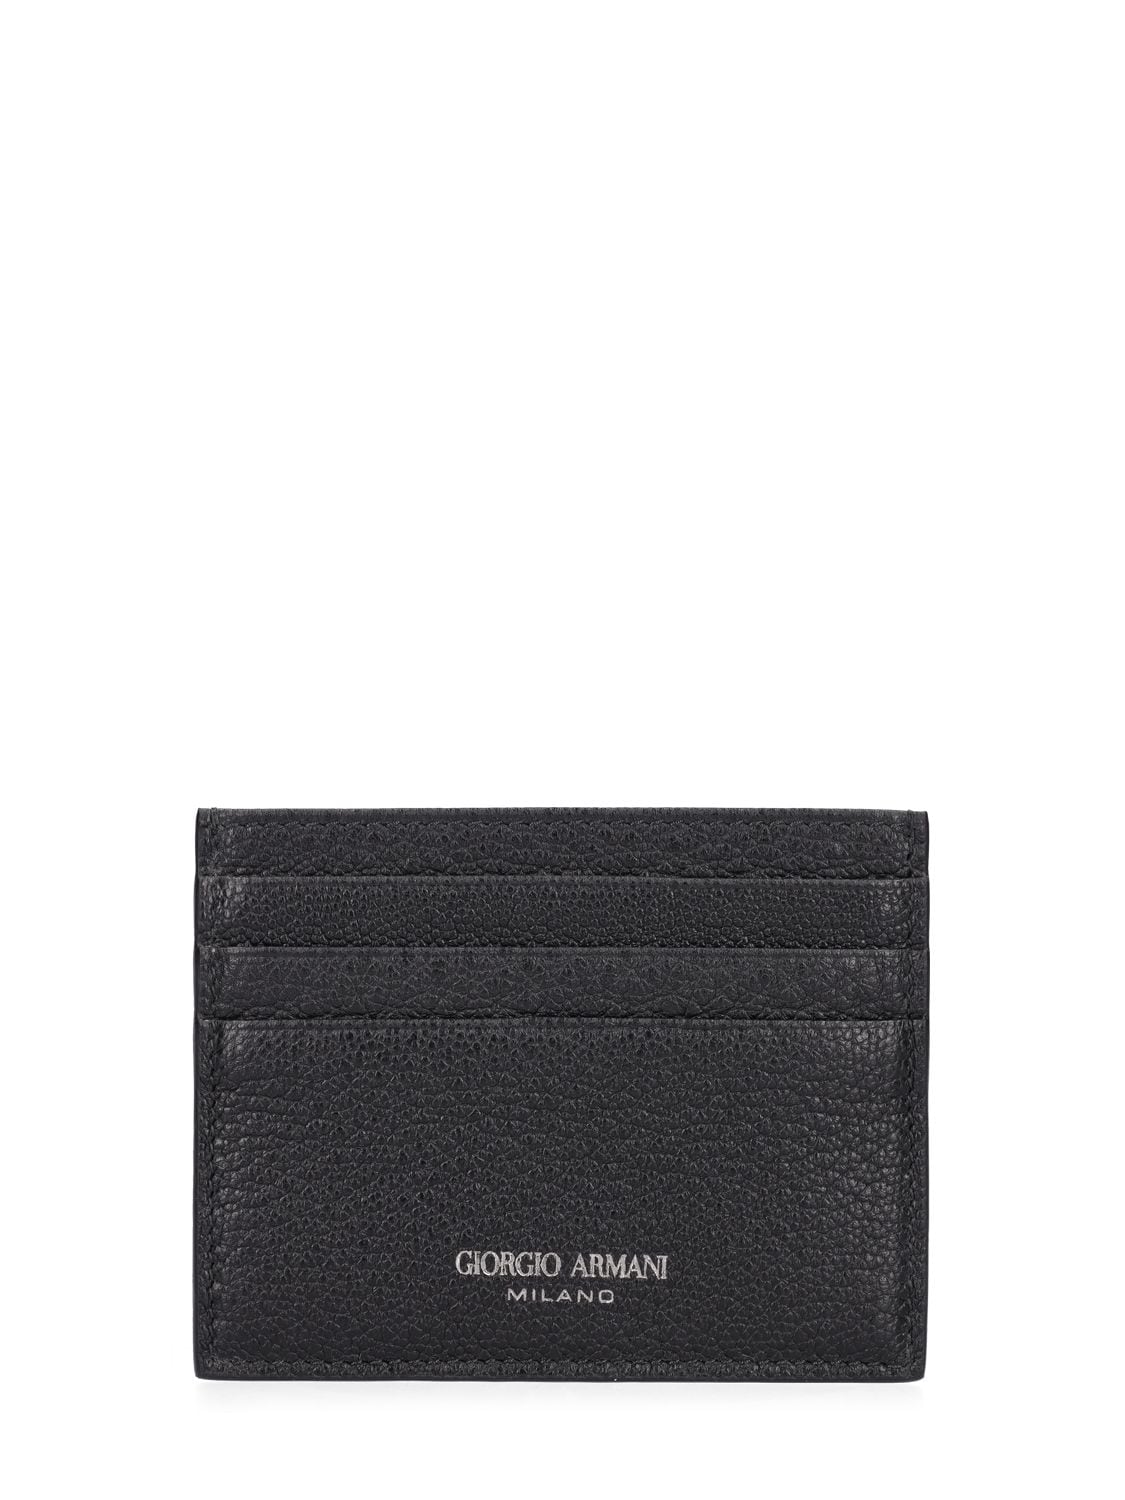 Image of Leather Card Holder Wallet